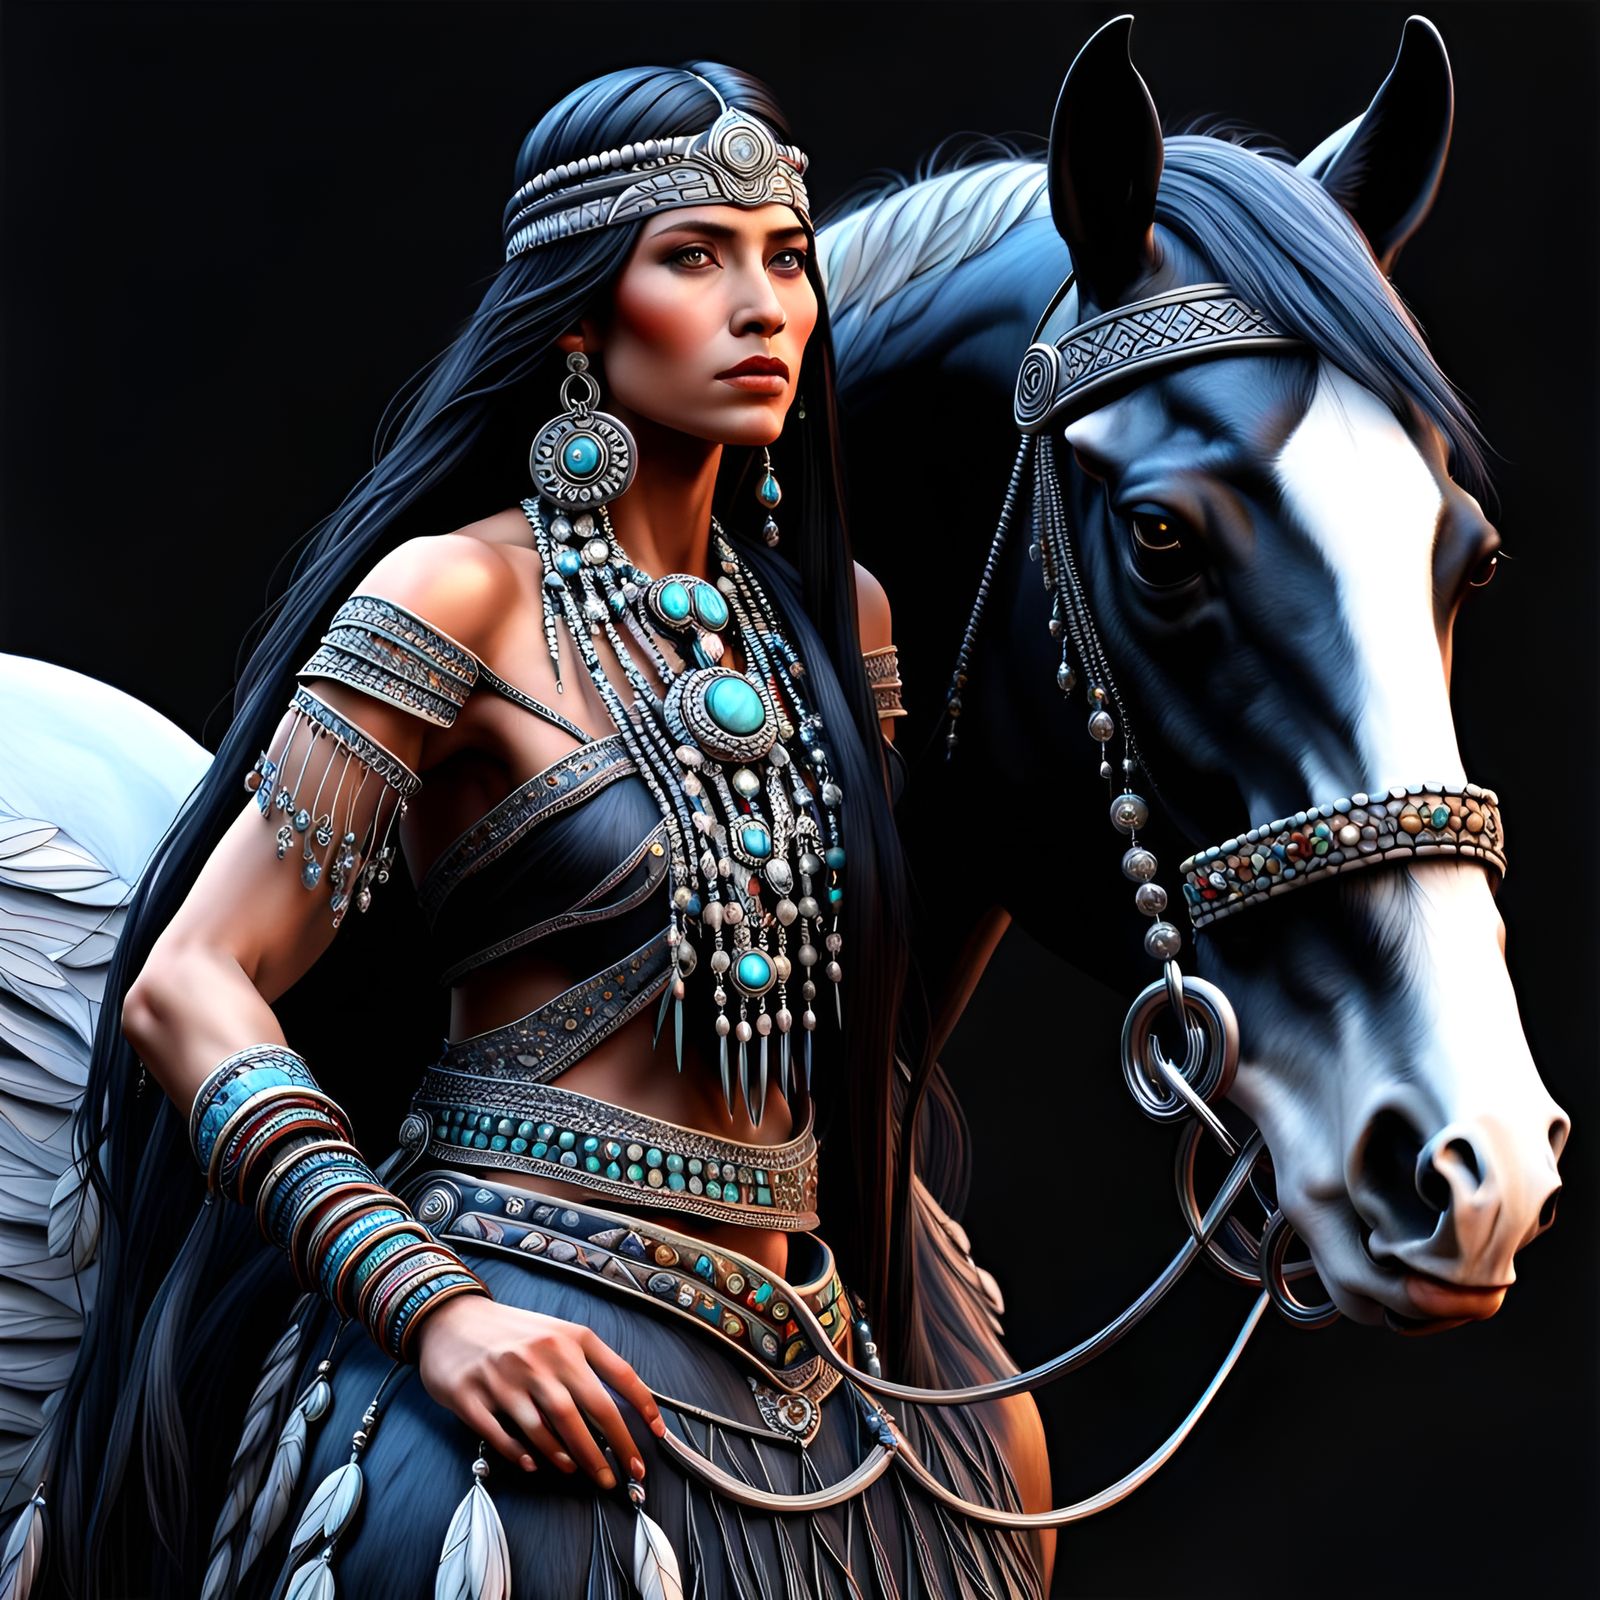 Native American Indian Warrior woman 2